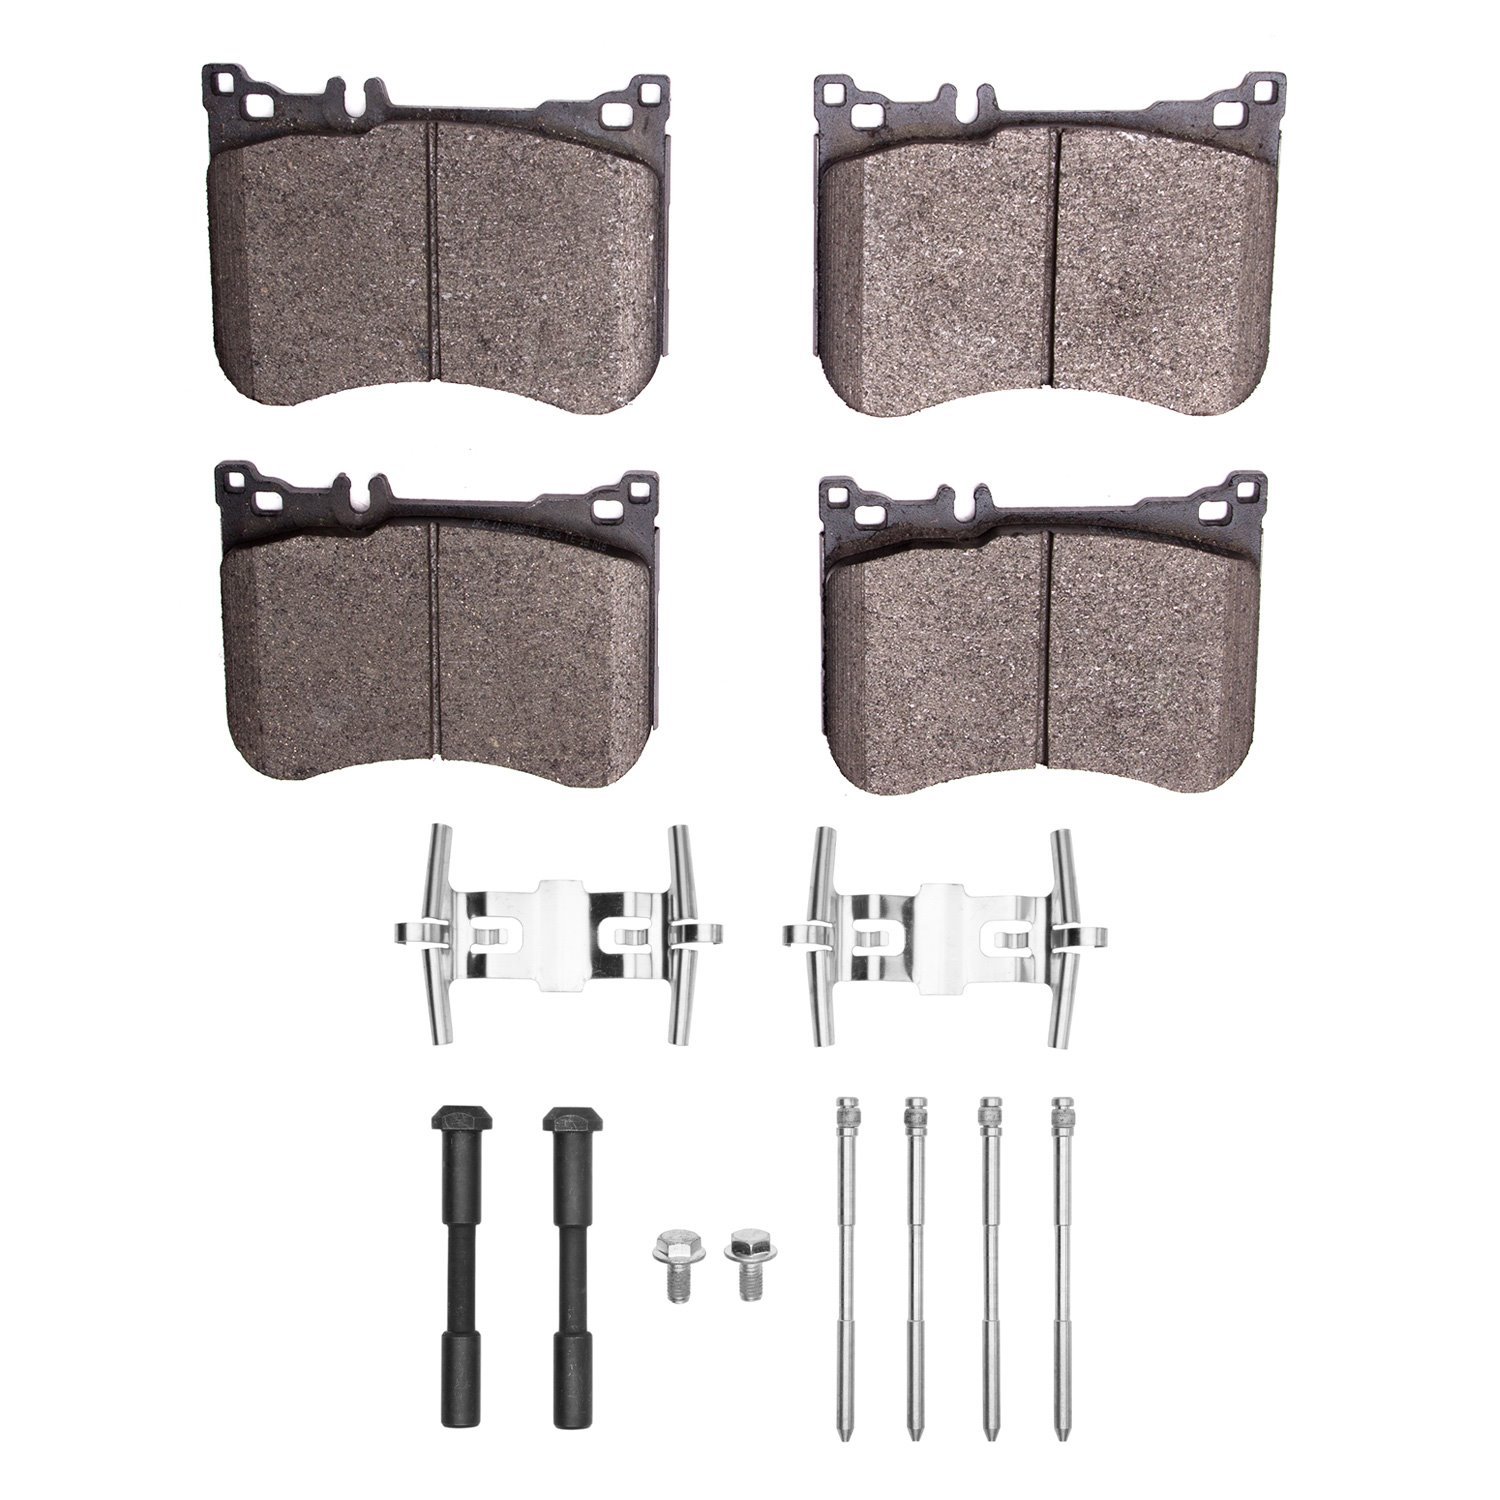 1600-1688-01 5000 Euro Ceramic Brake Pads & Hardware Kit, Fits Select Mercedes-Benz, Position: Front